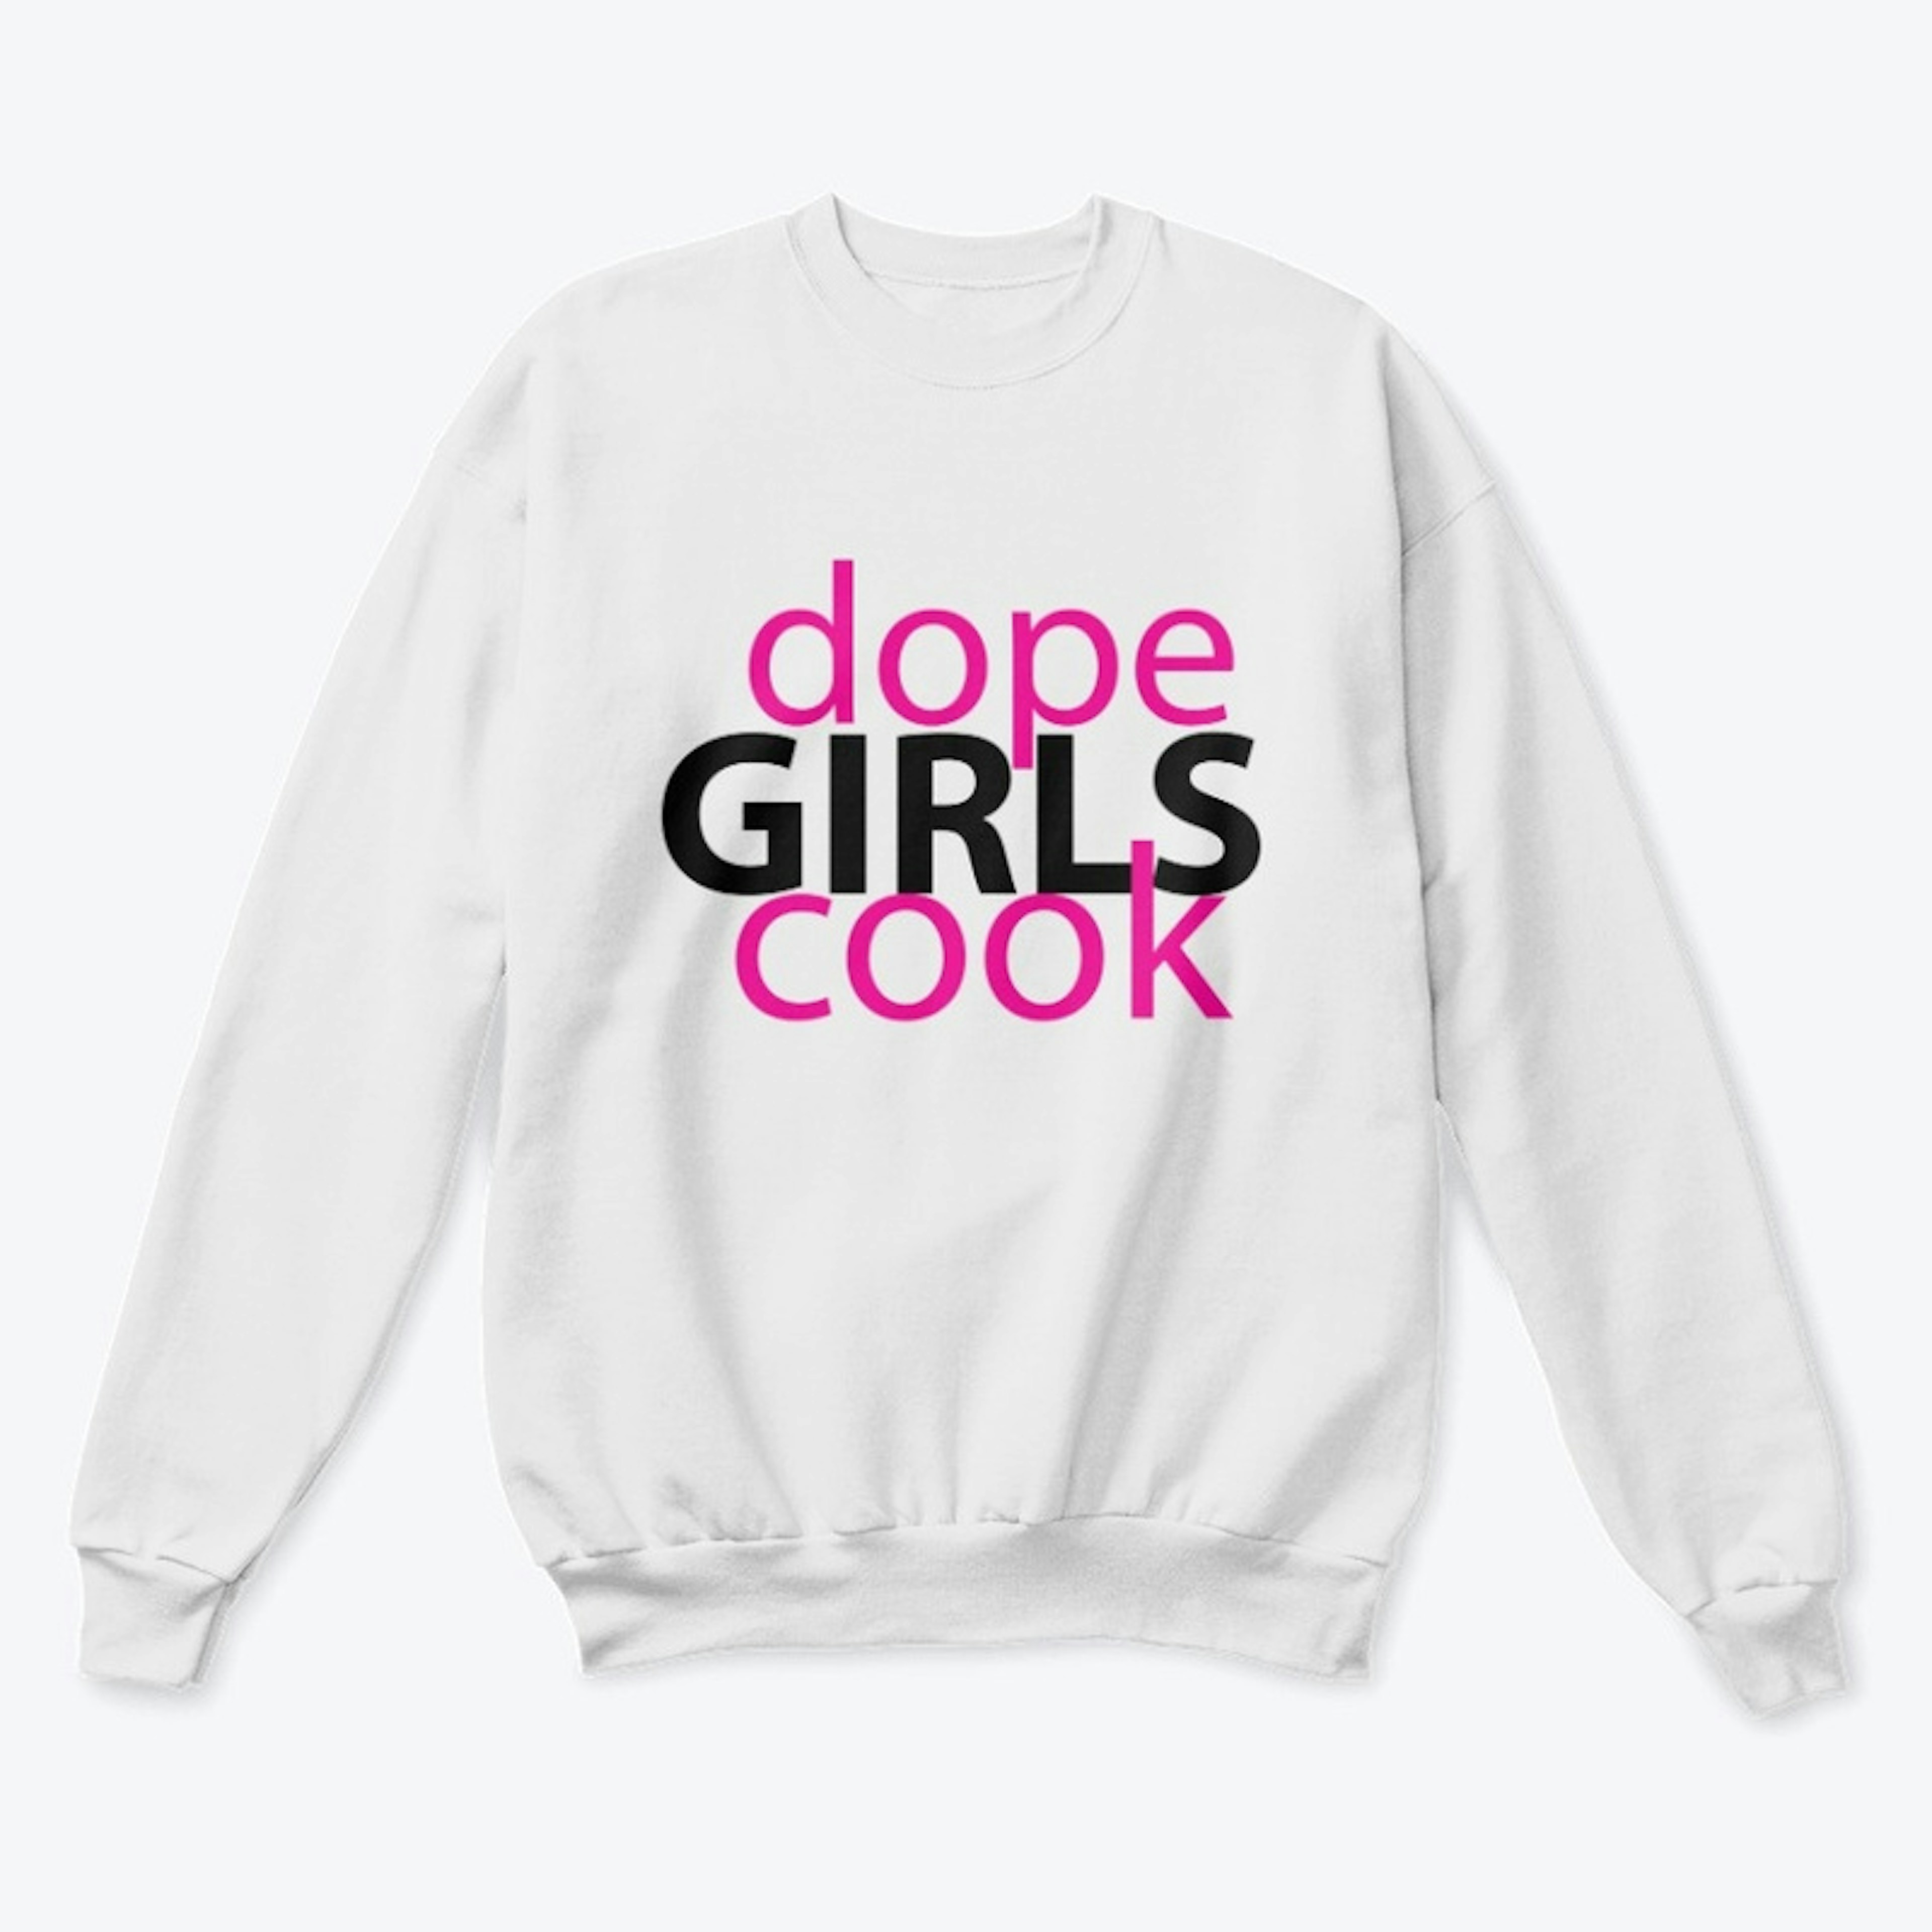 #dopegirlscook HOT PINK 